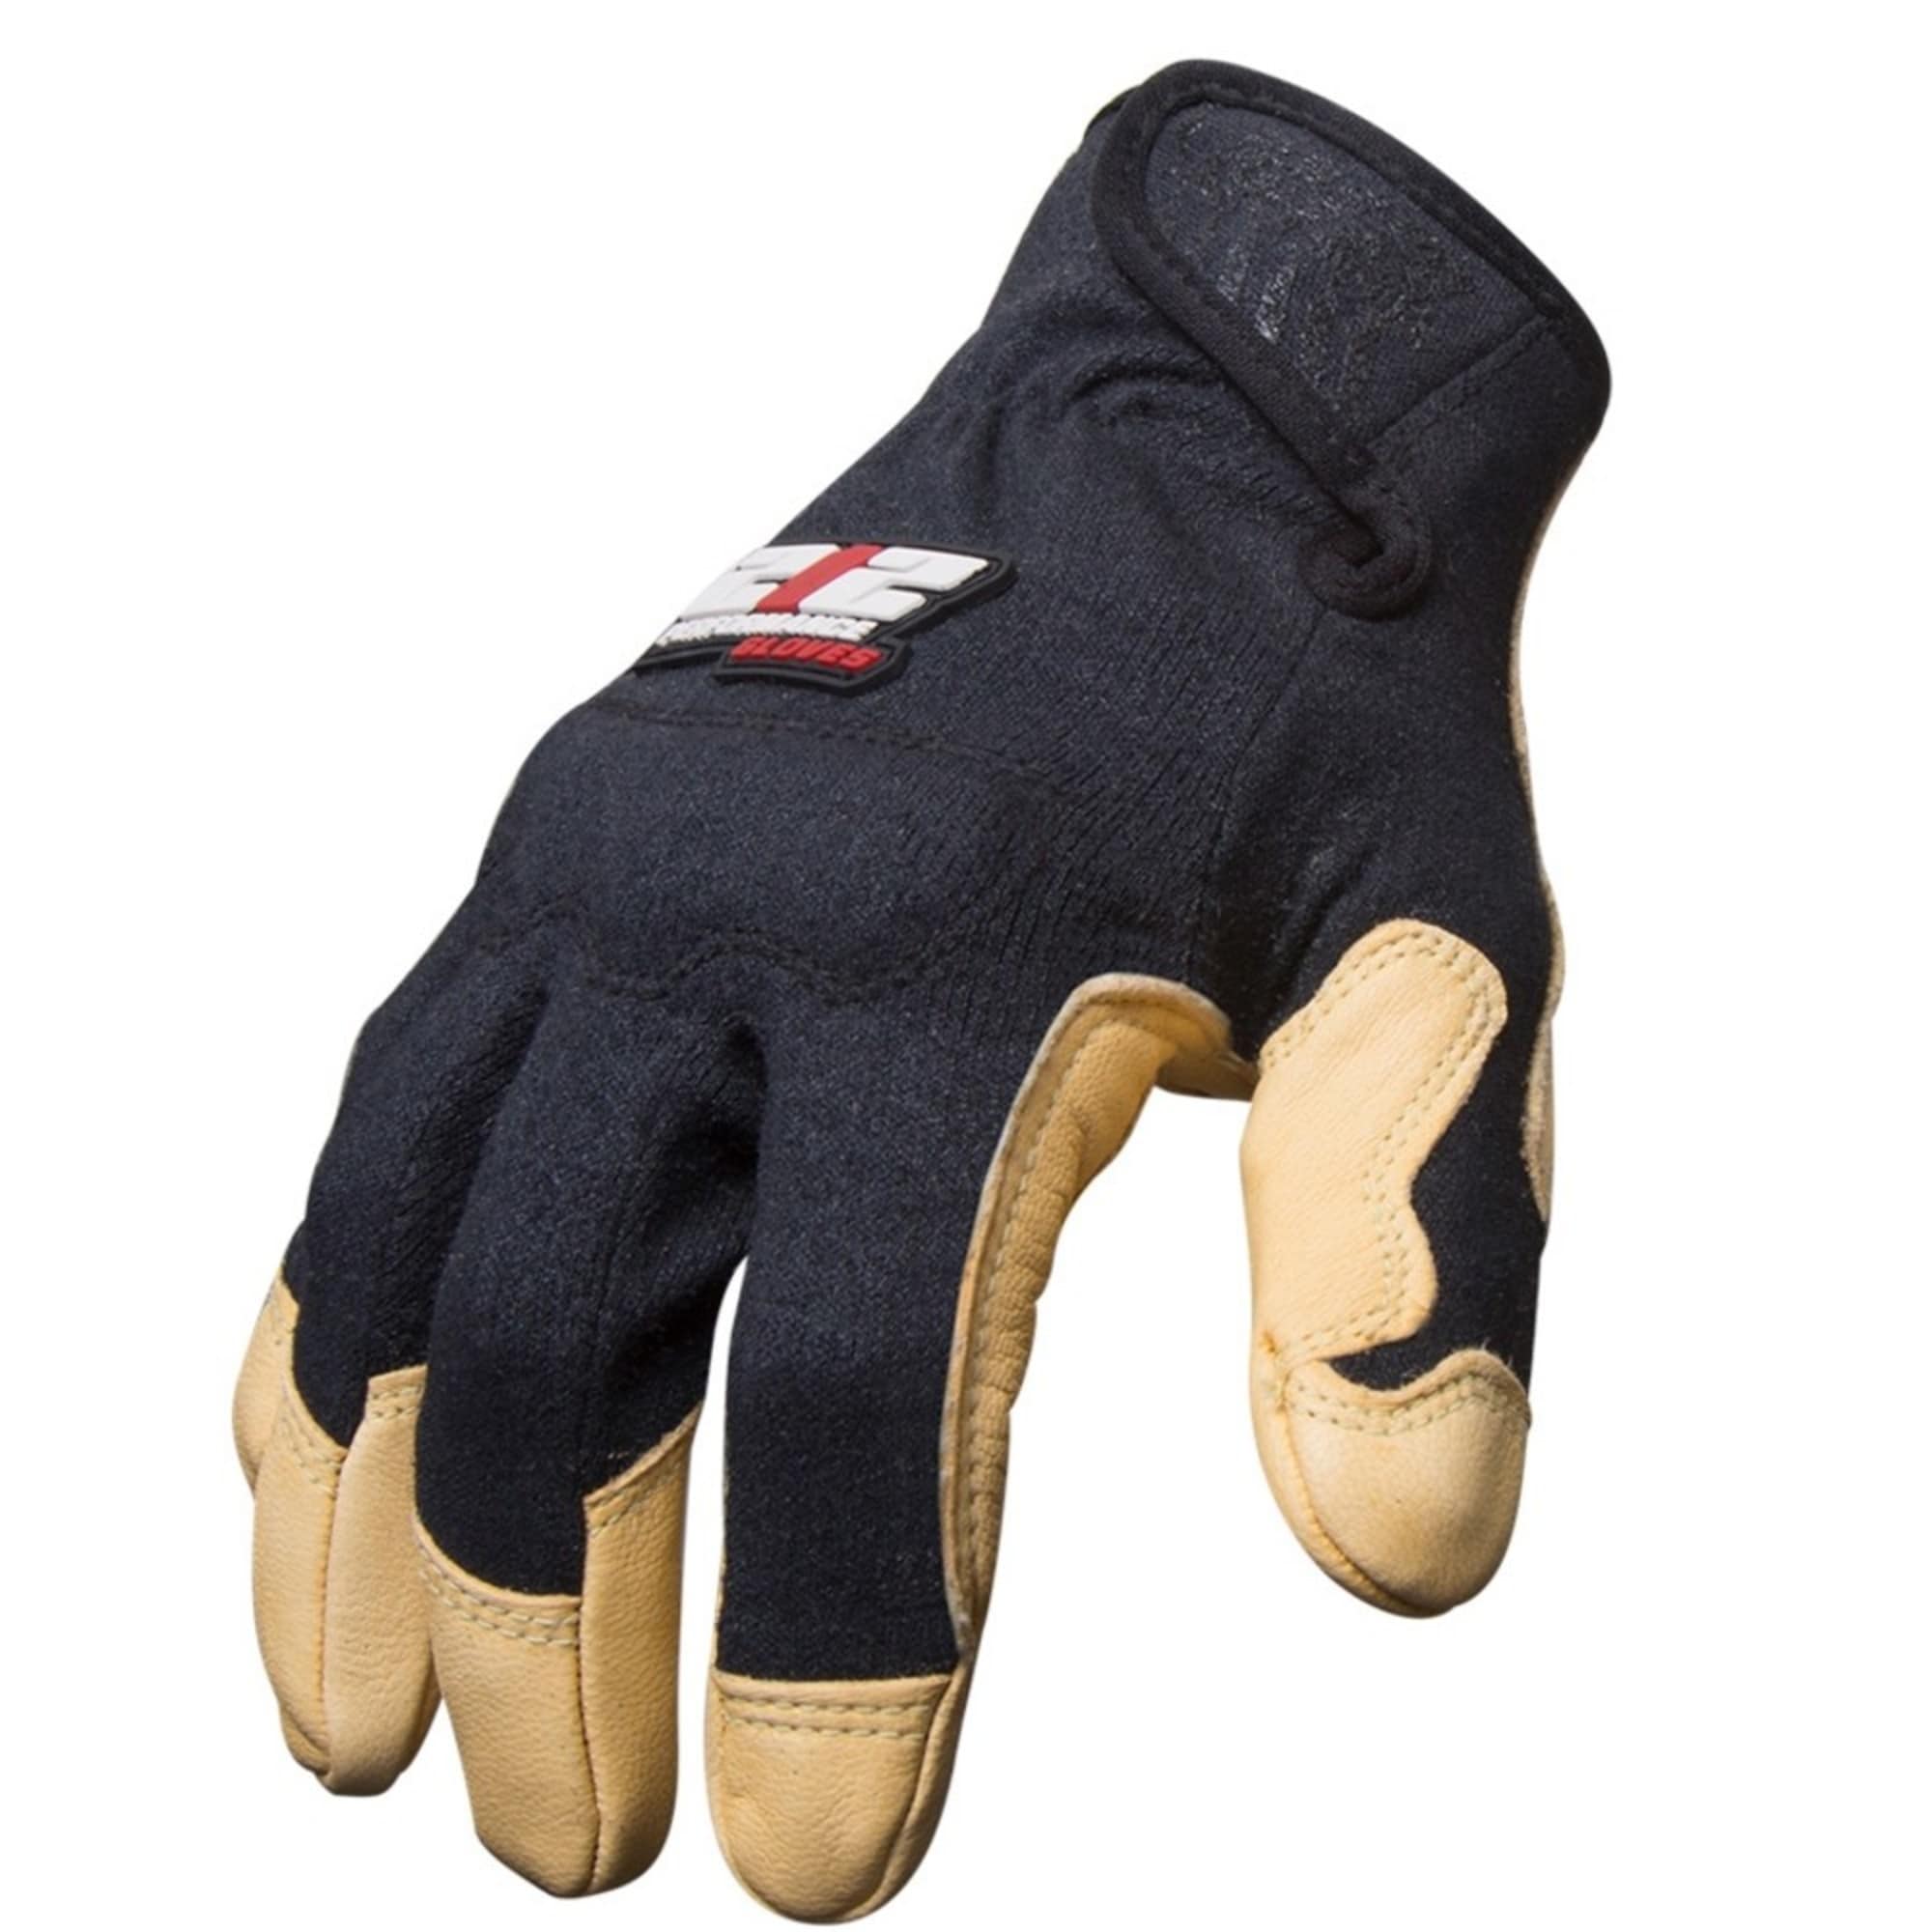 212 Performance Medium Black Leather Gloves, (1-Pair) at